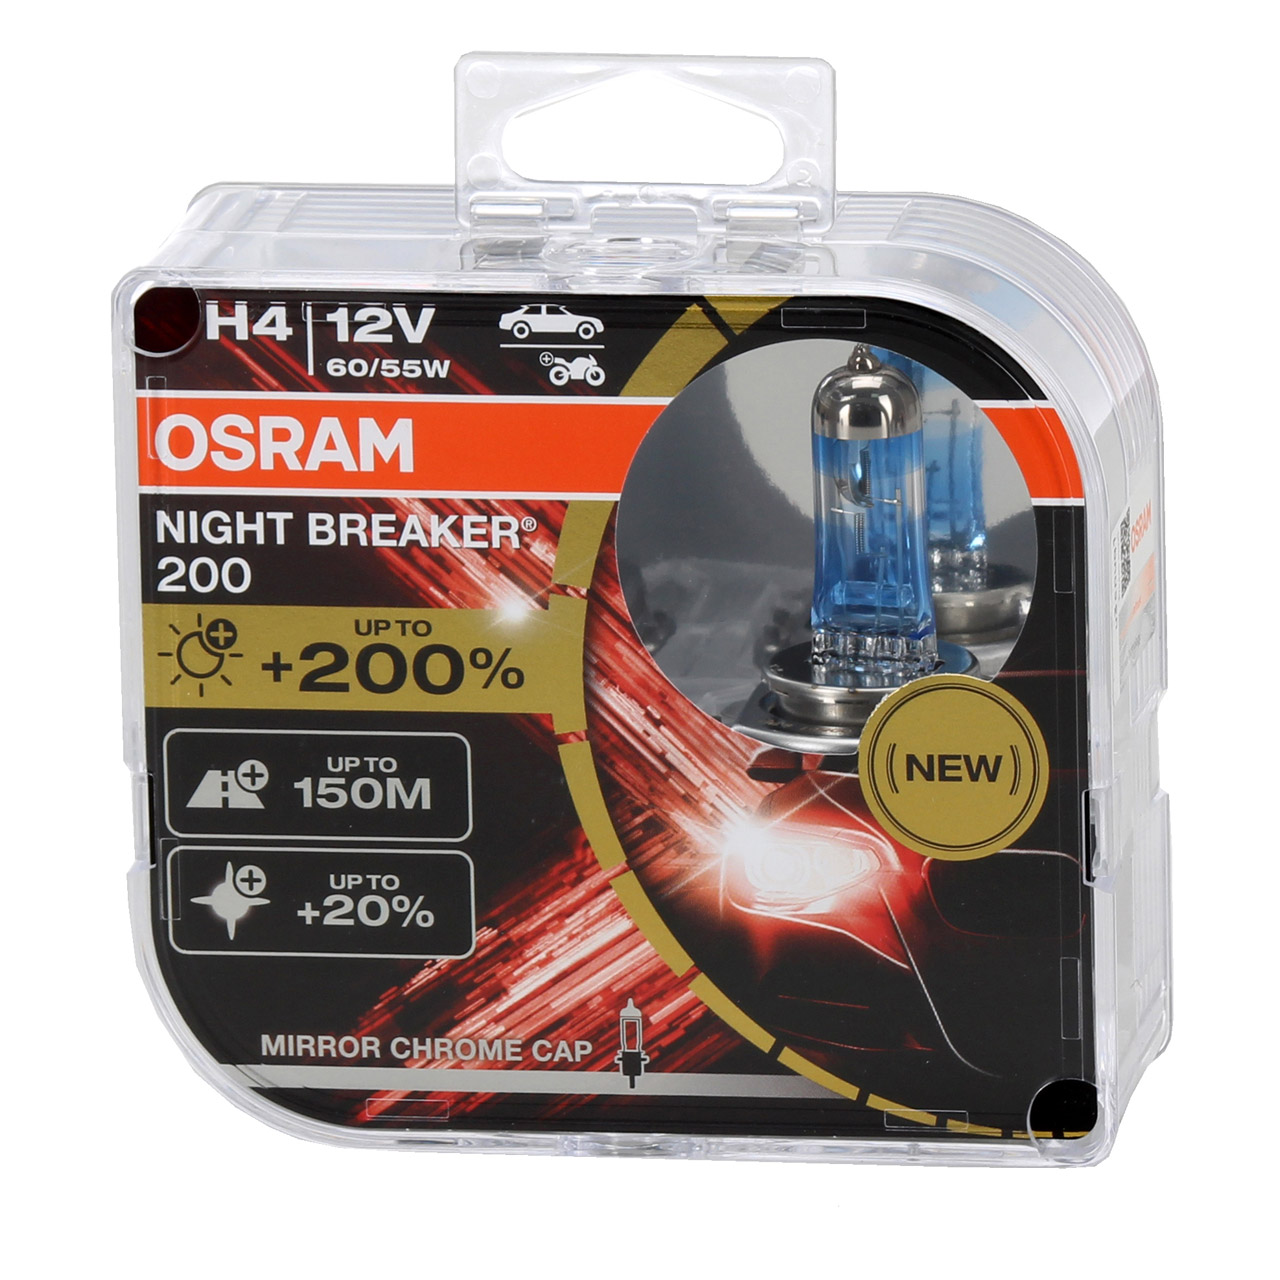 2x OSRAM H4 NIGHT BREAKER 200 Glühlampe Halogenlampe 12V 60/55W P43t +200%